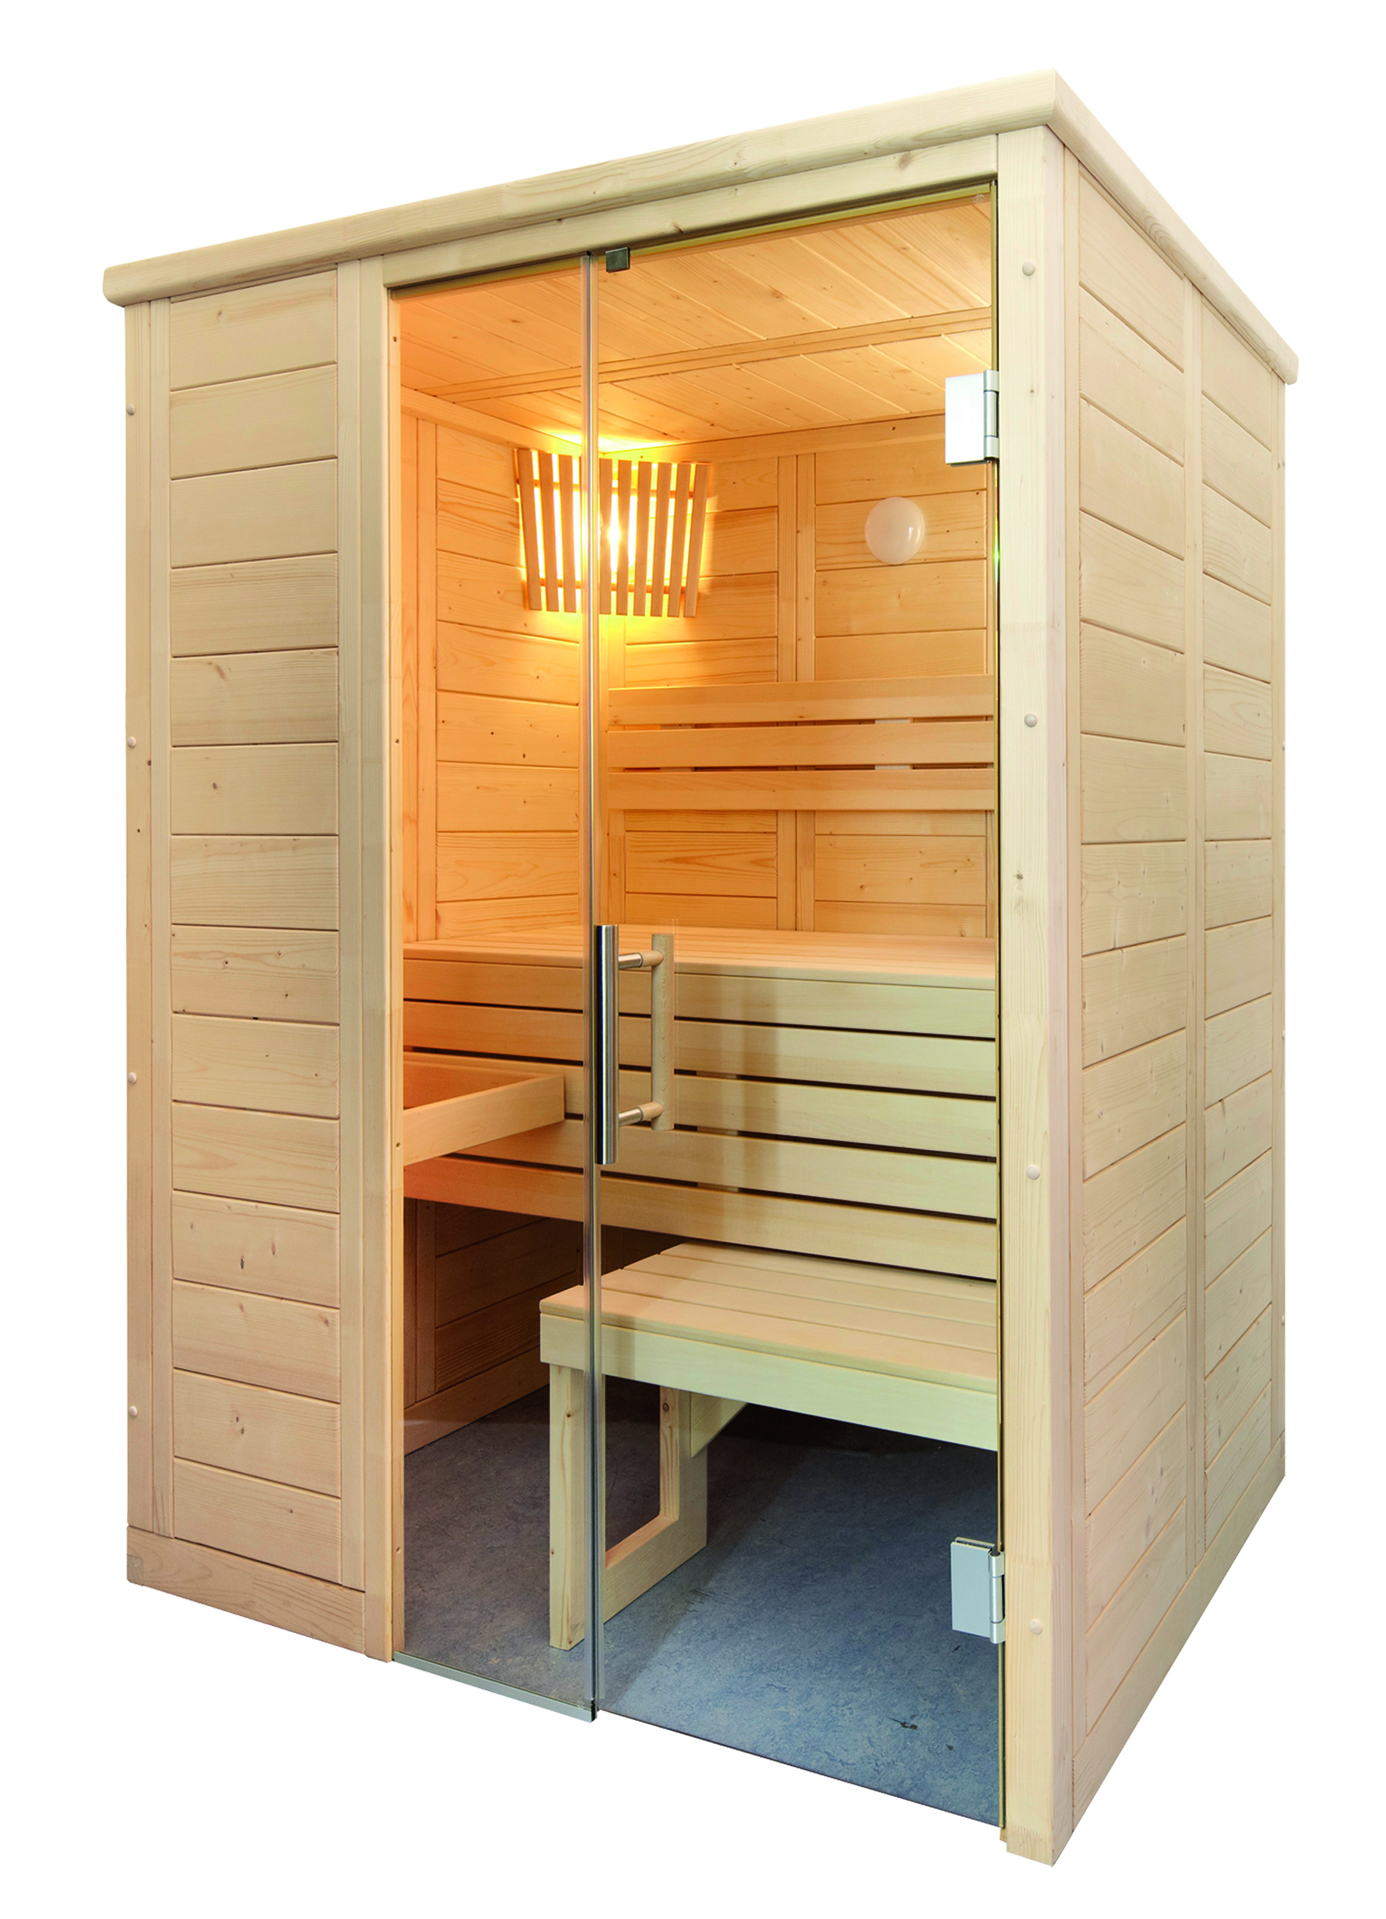 sentiotec / products / sentiotec sauna / Sauna cabins / Alaska Mini